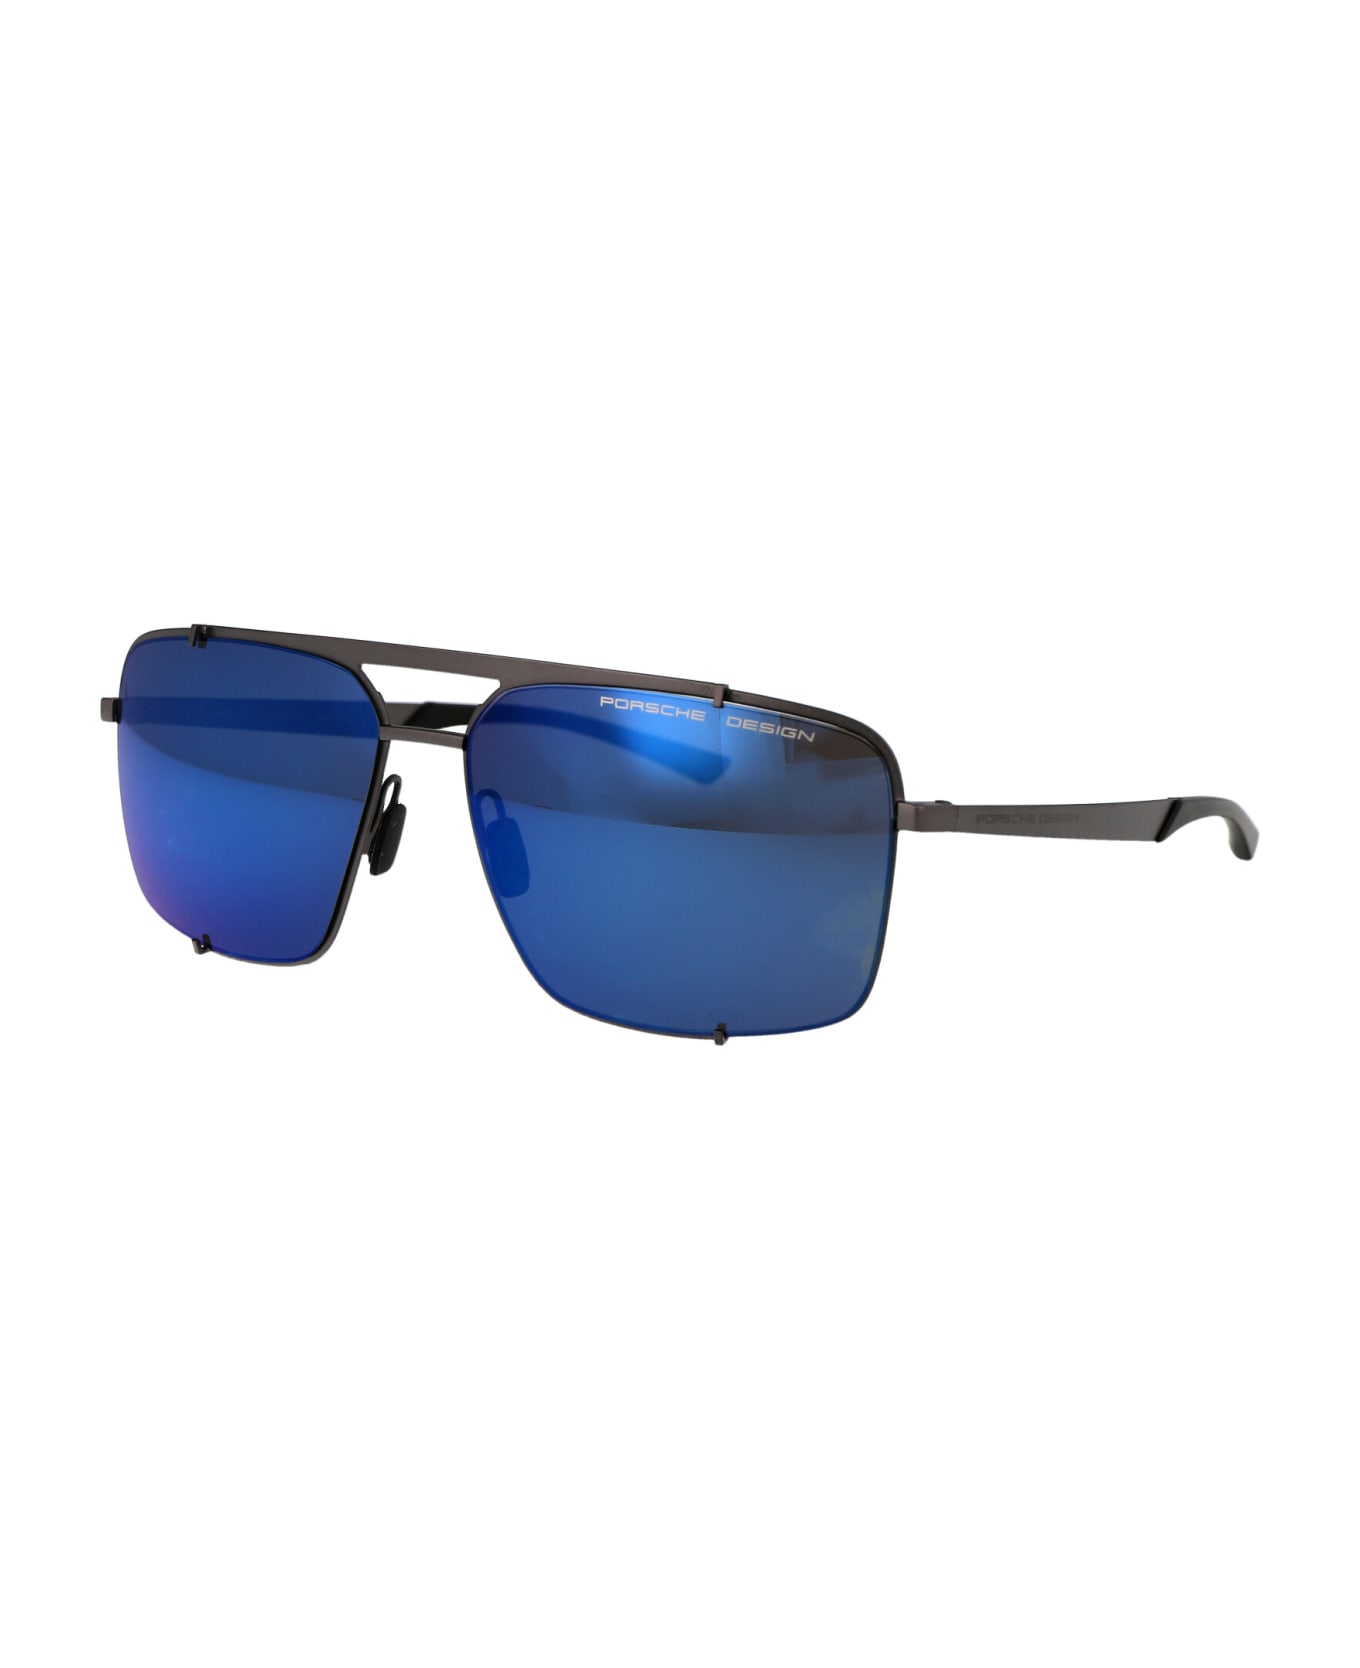 Porsche Design P8919 Sunglasses - D279 BLUE/MIRROR BLUE